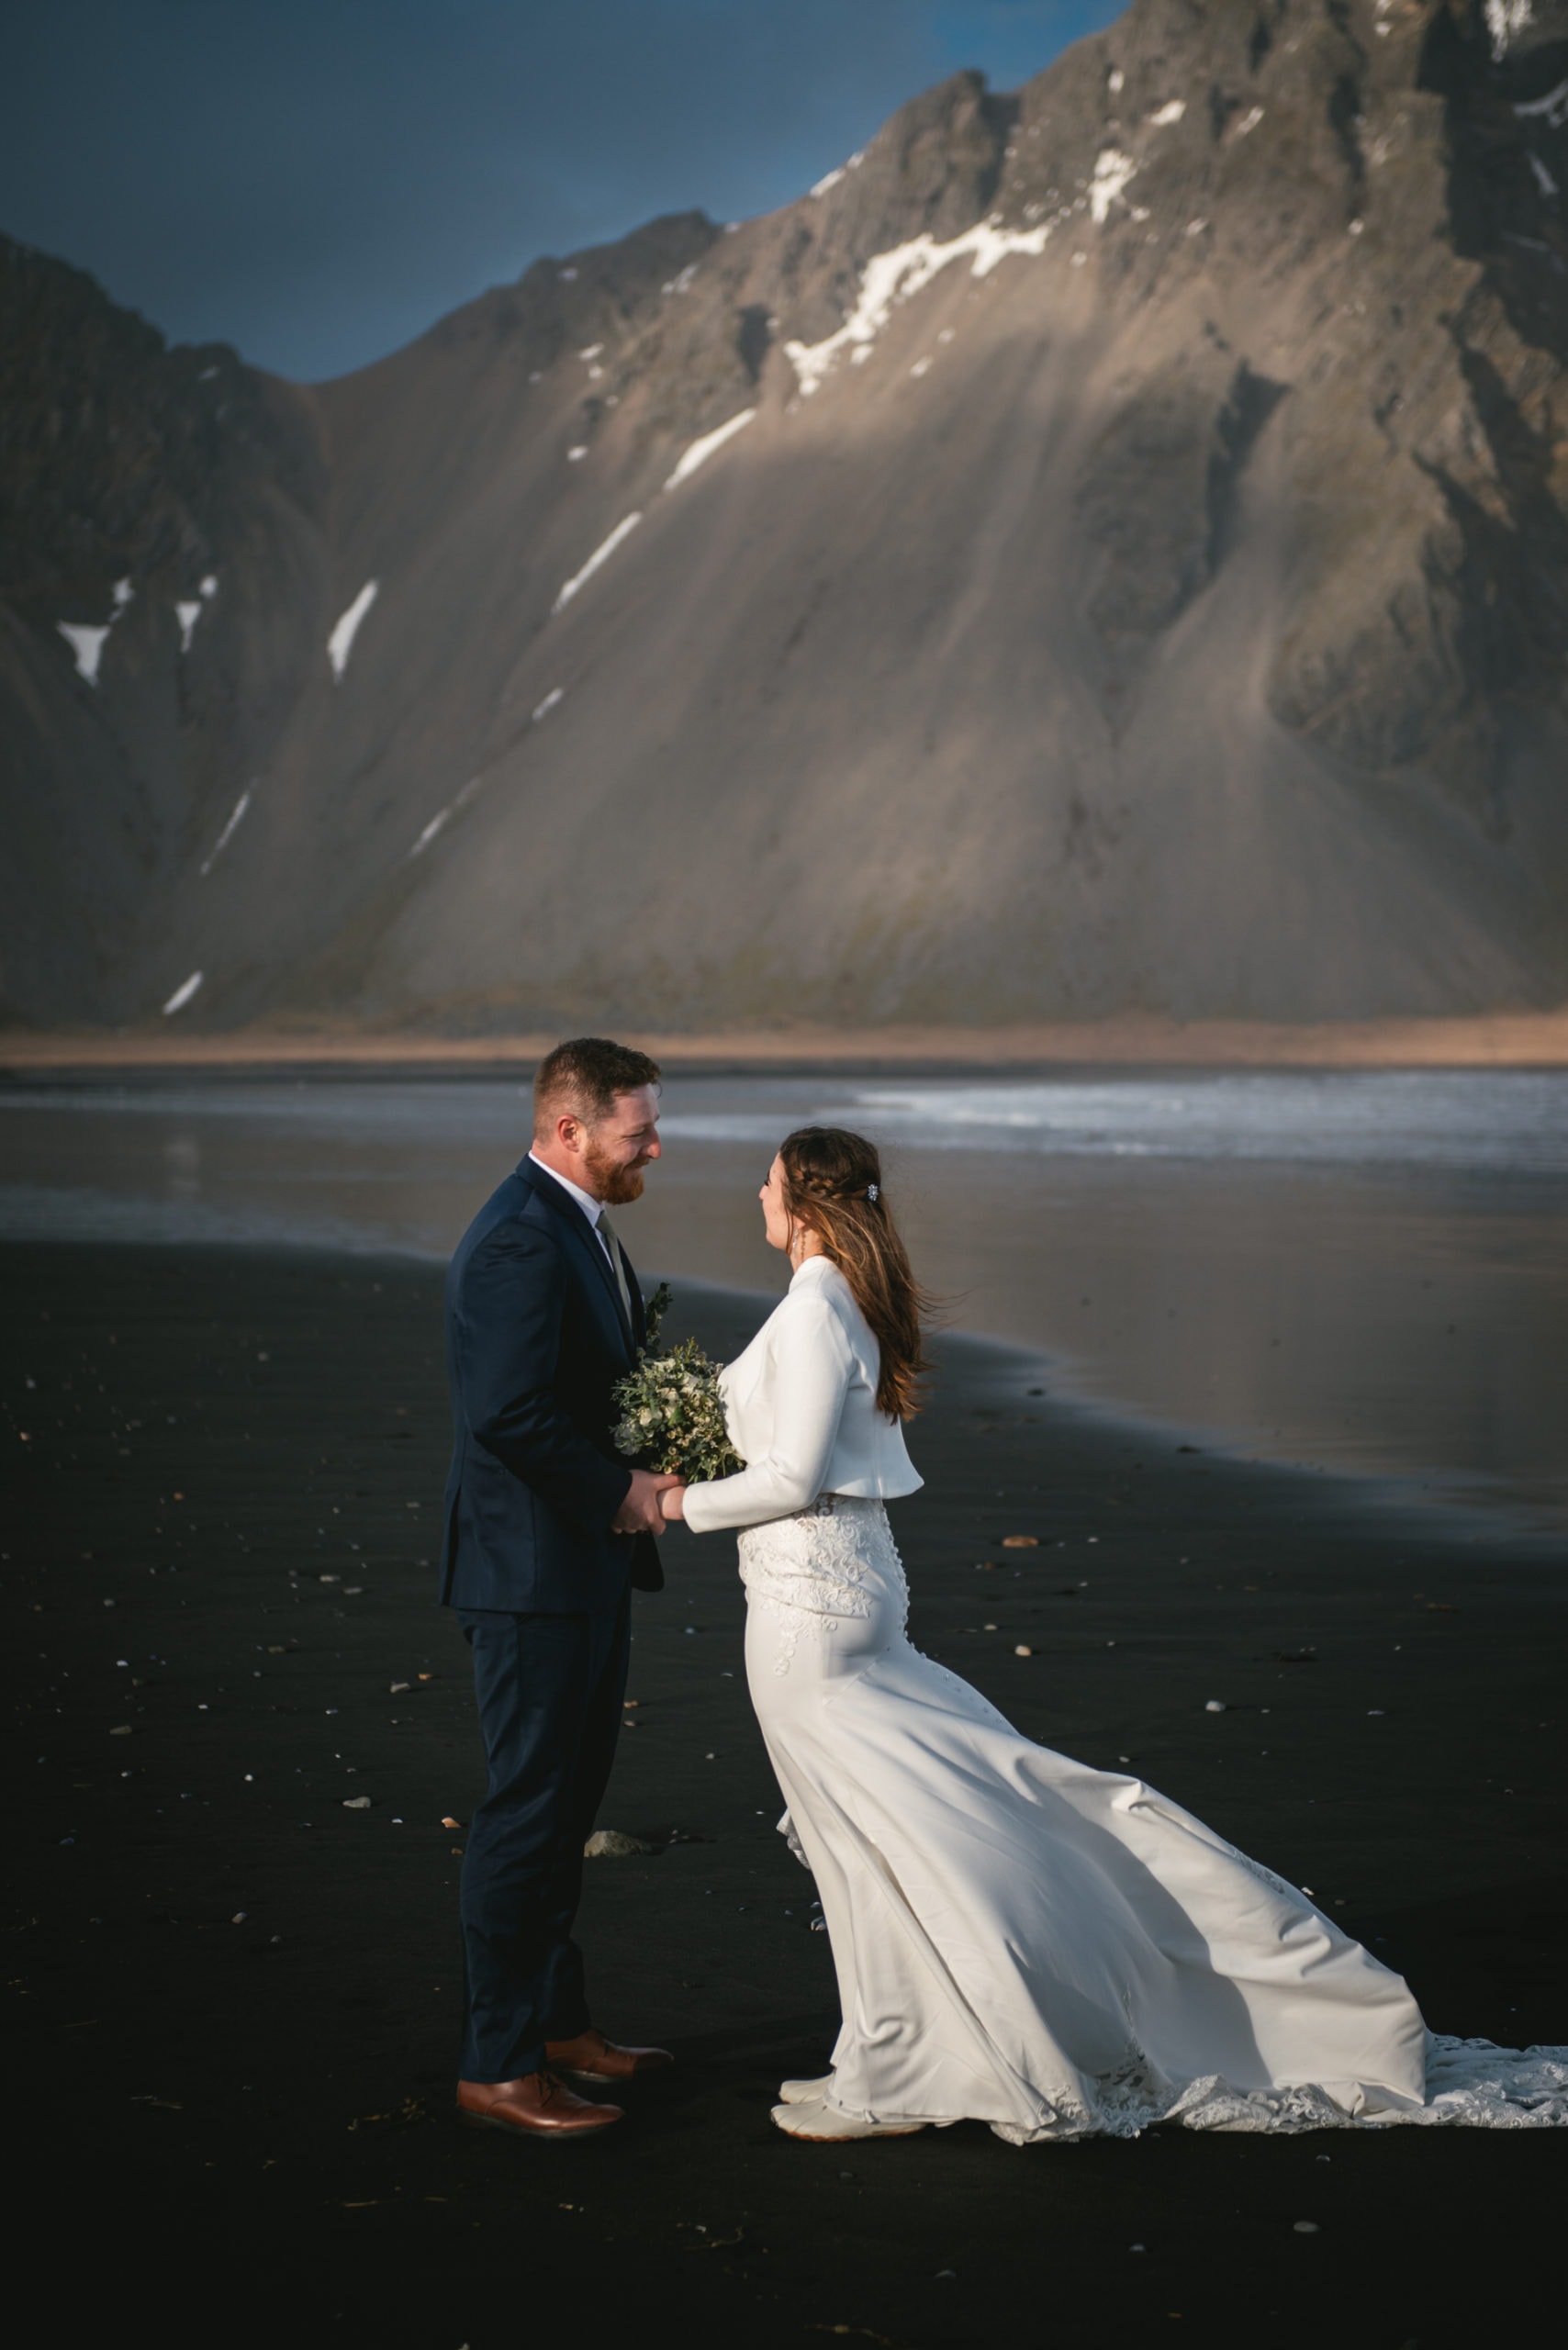 Adventure elopement in Iceland